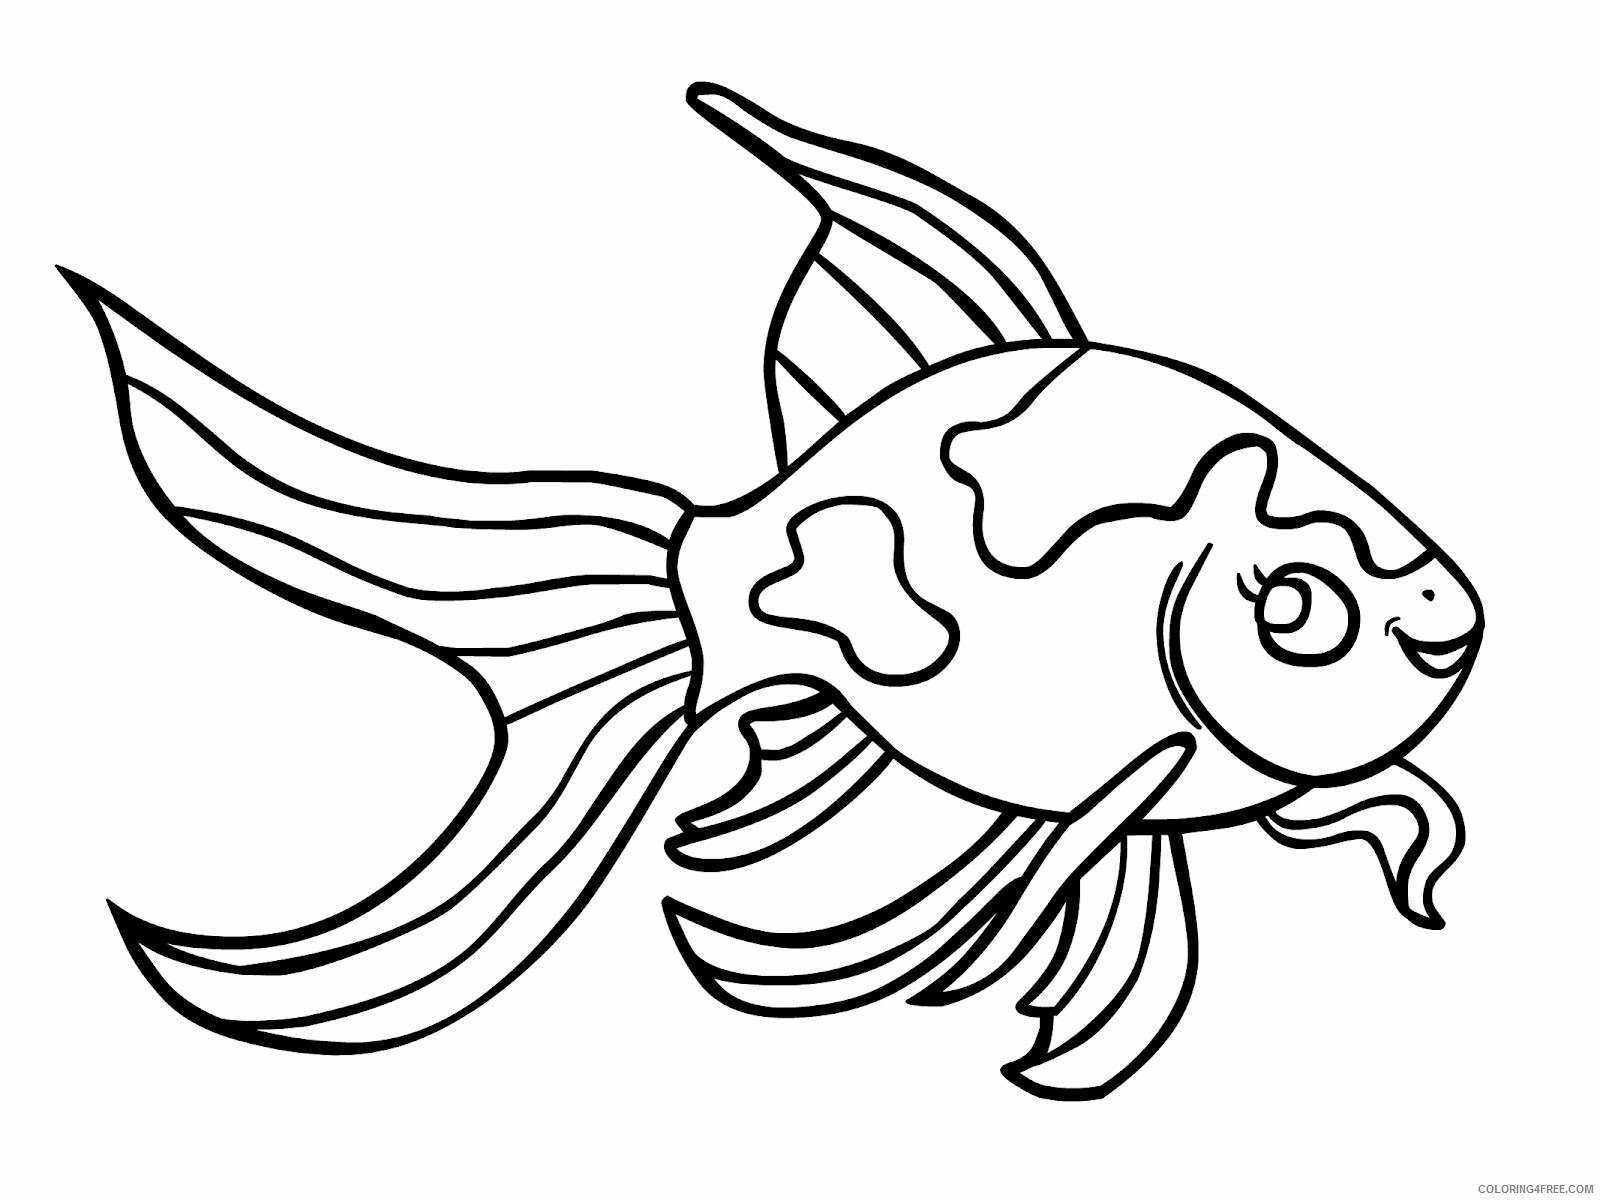 Fish Coloring Pages Animal Printable Sheets Free Goldfish 2021 2095 Coloring4free